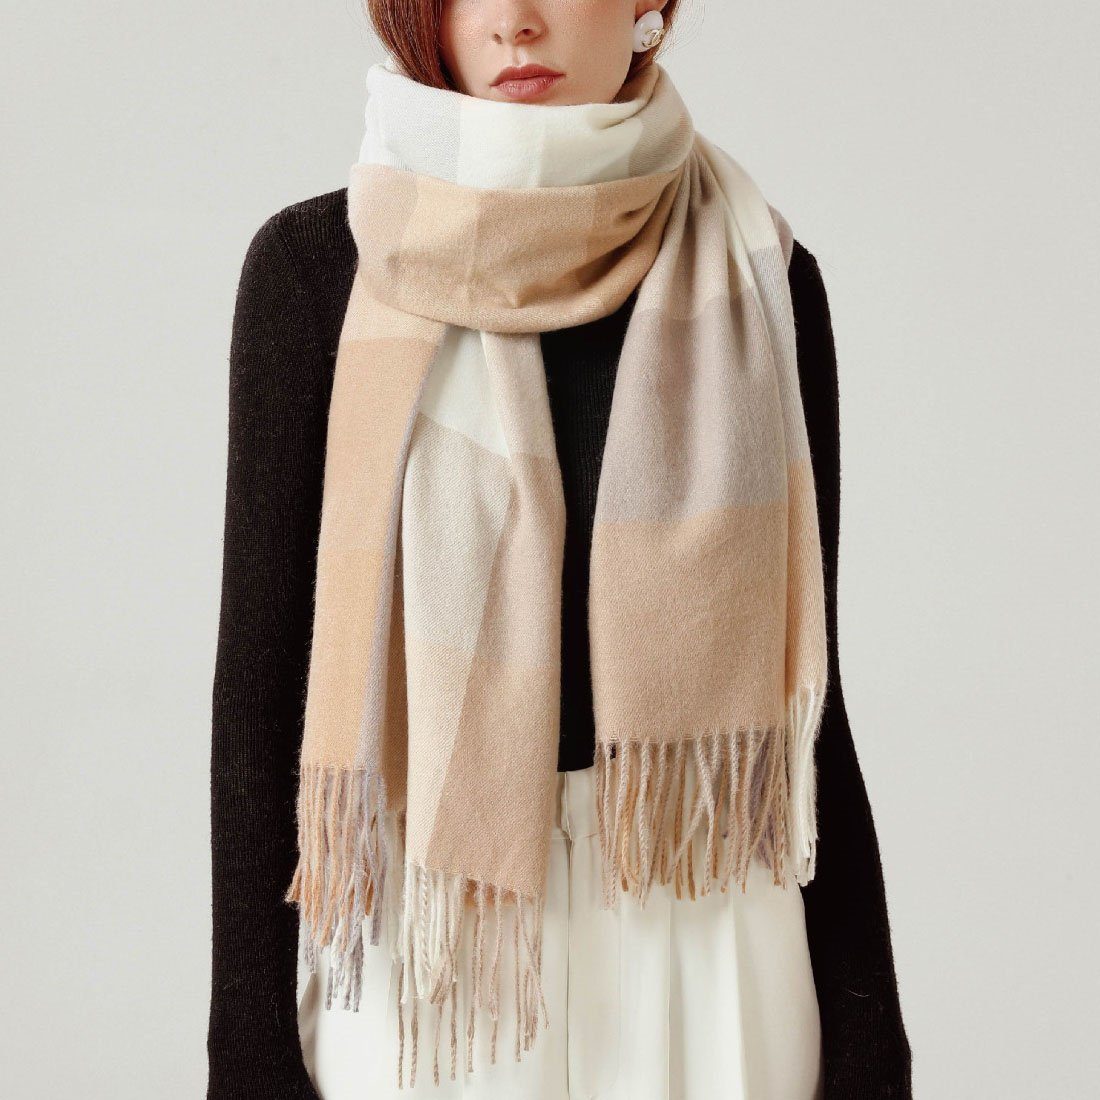 DÖRÖY Modeschal Damen Vintage gestreiften Winter Schal, Schal Rosa Warm quadratischen